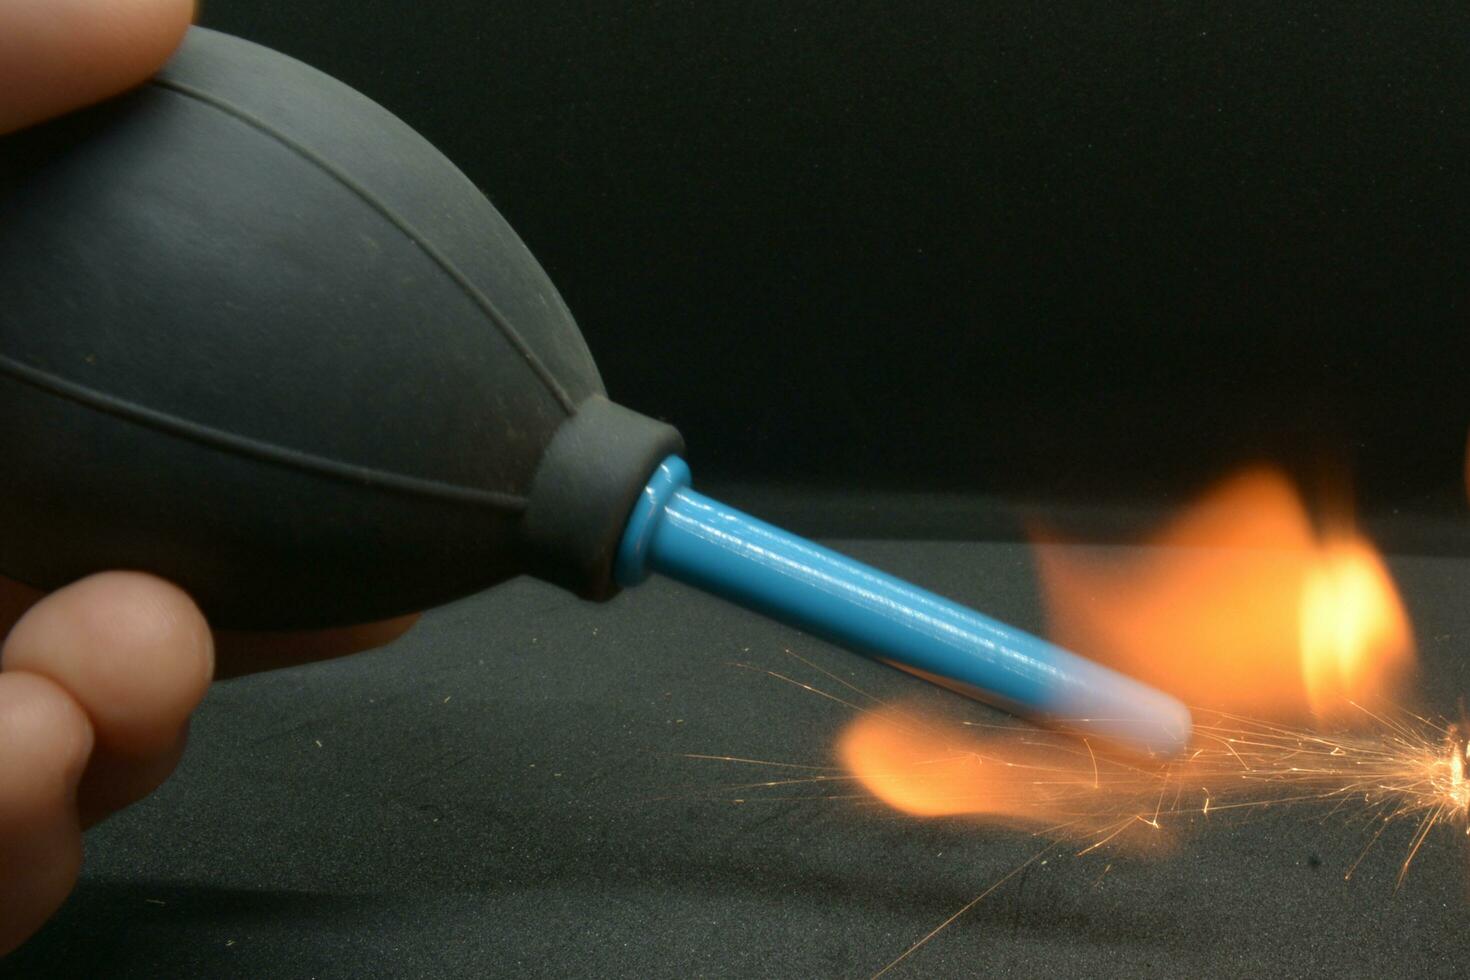 camera blower on fire, black background photo